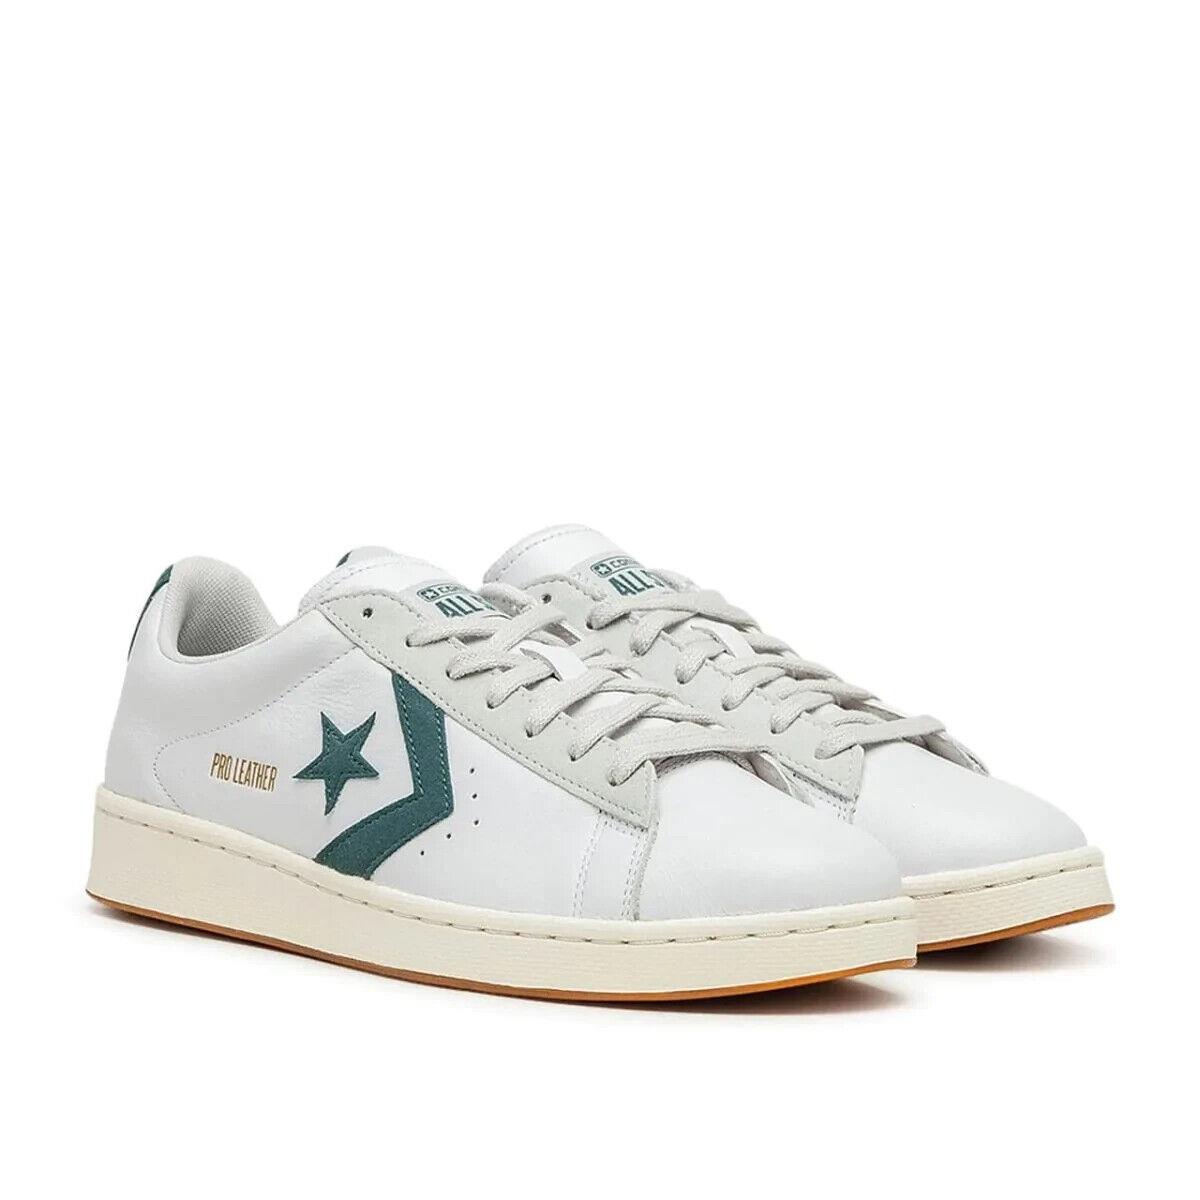 Converse Pro Leather OX 171317C Unisex White Sneaker Shoes Size 4.5M/6W C454